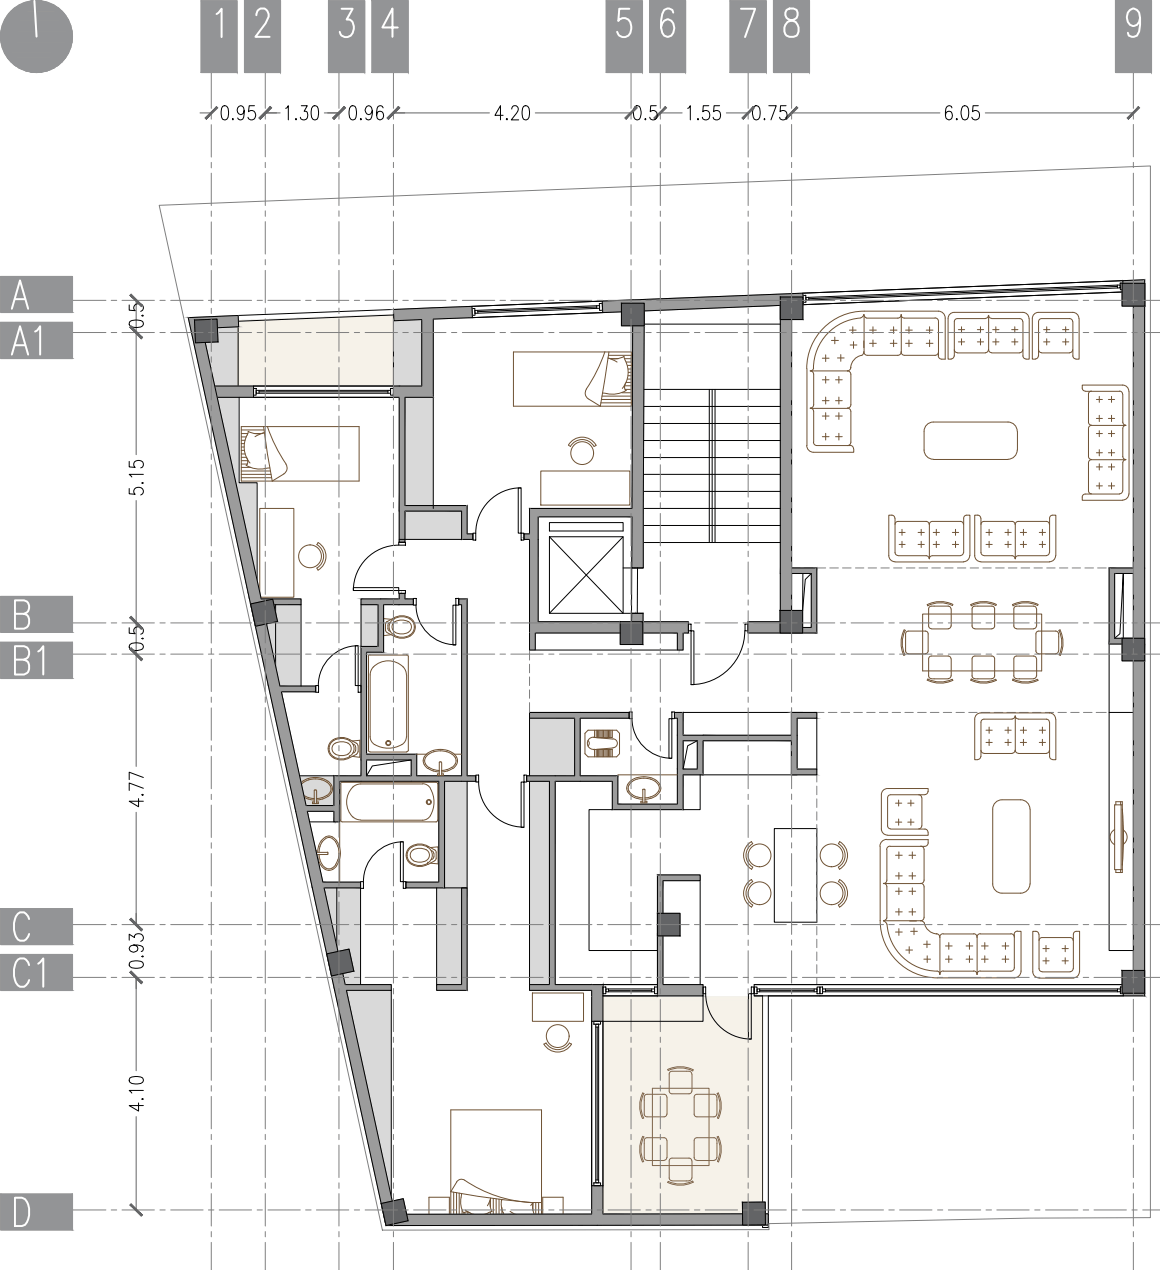 4th floor plan, apartment in 104 st